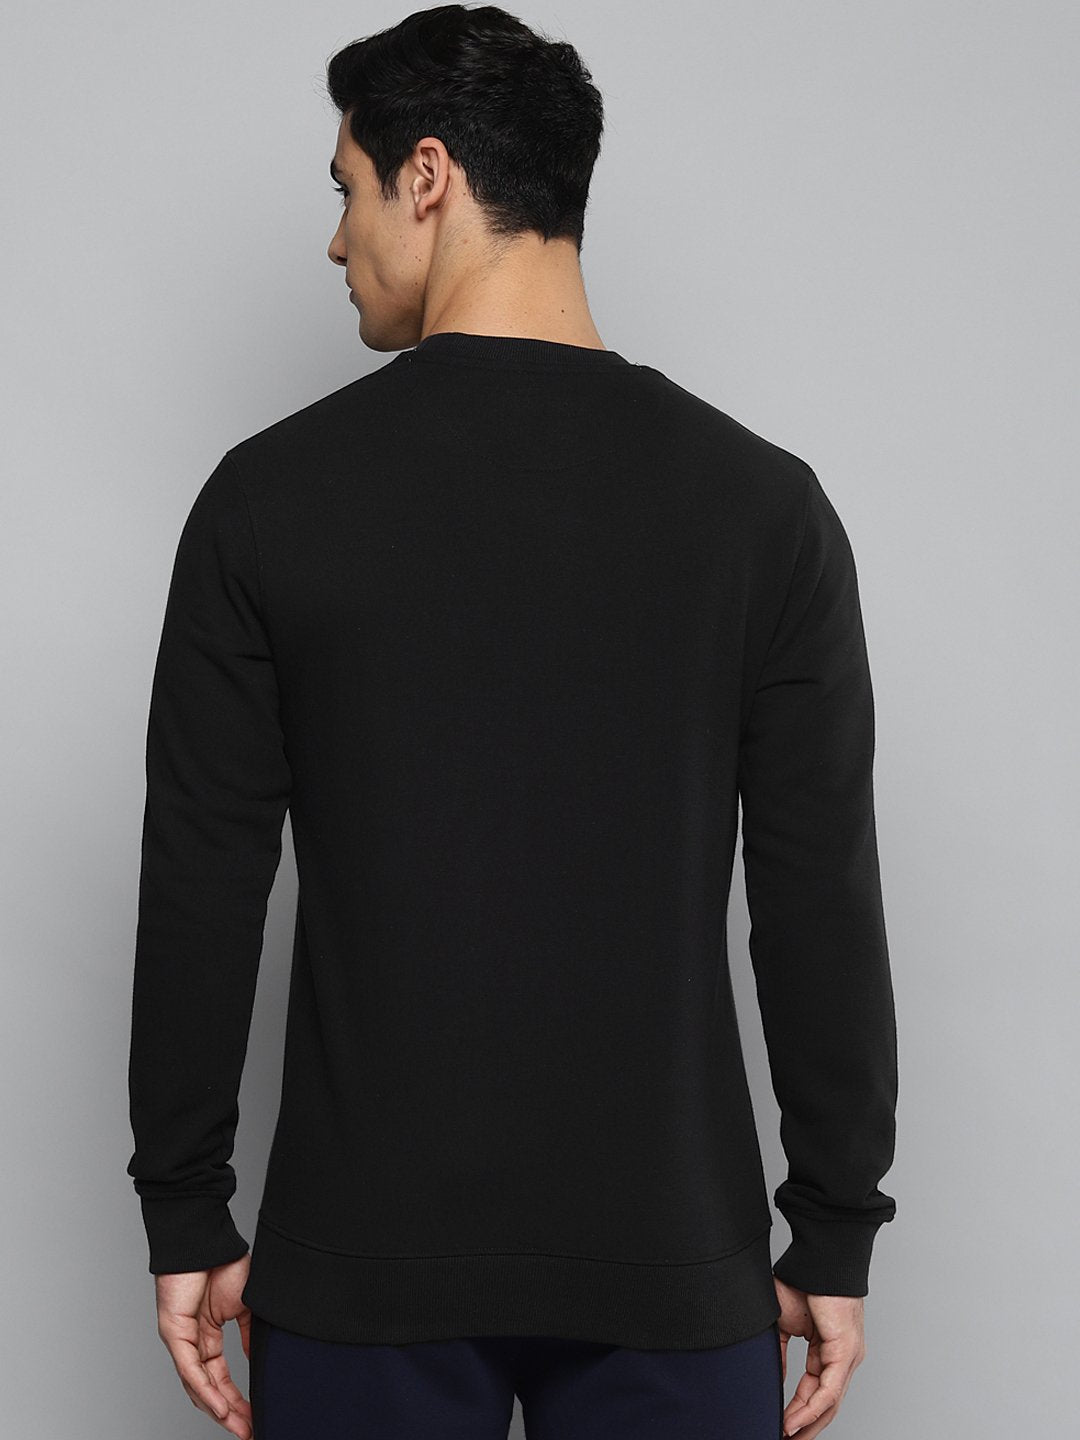 Alcis Men Black & White Printed Sweatshirt